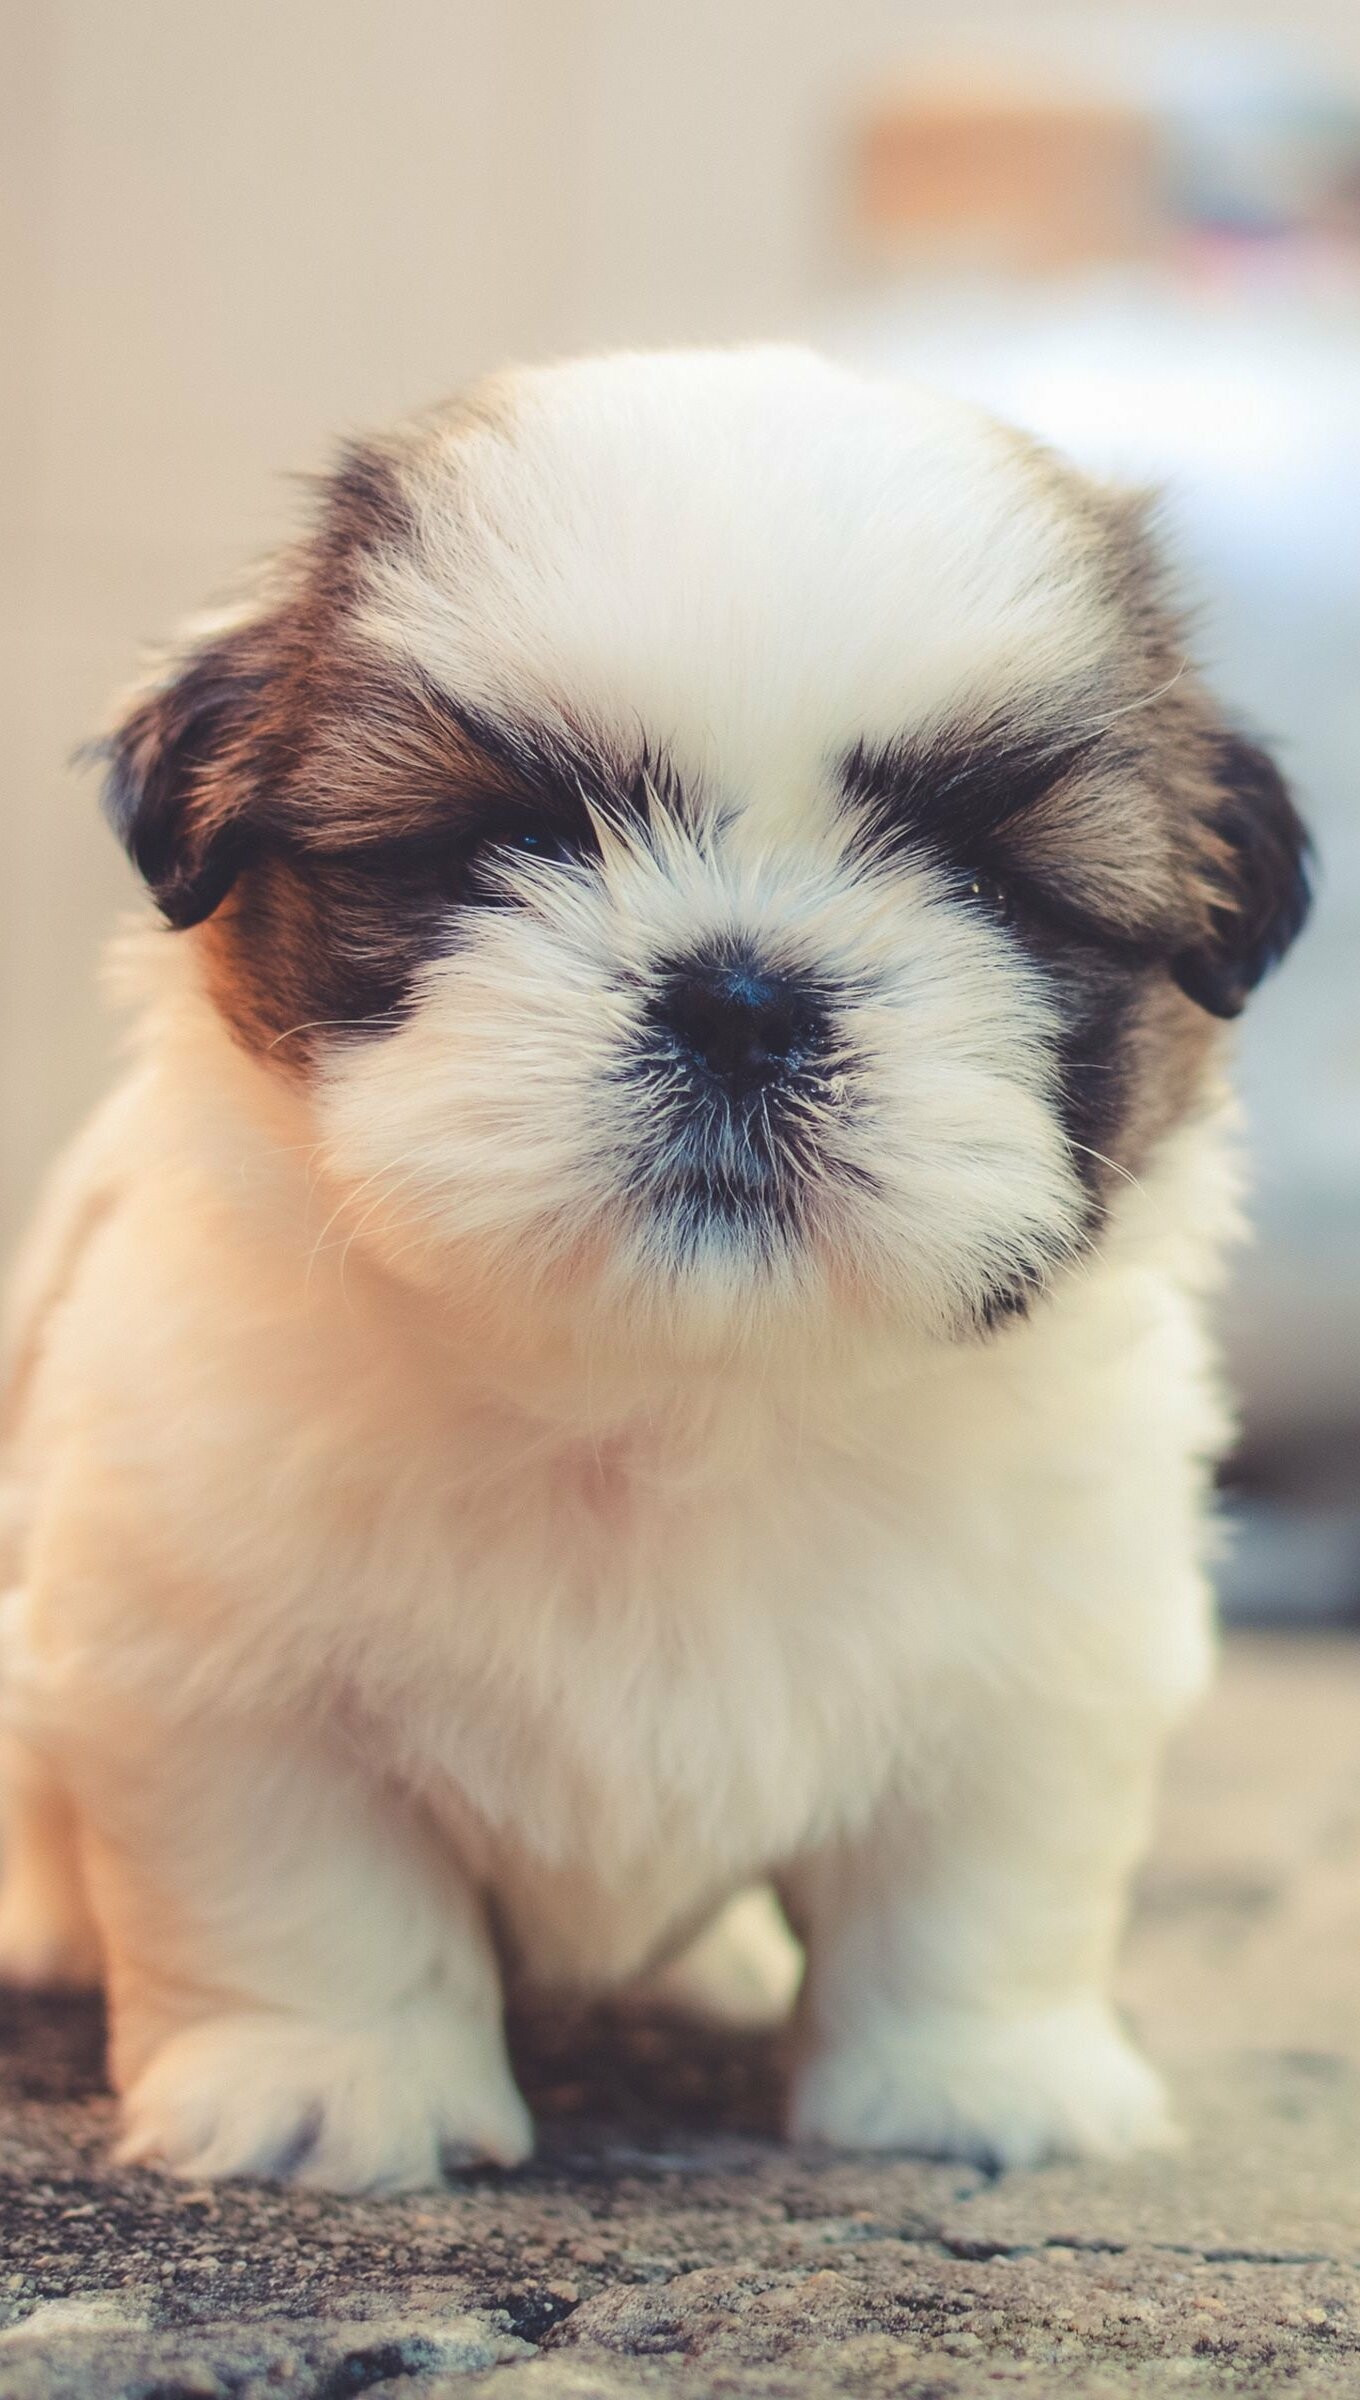 Puppy: Shih Tzu, A toy dog breed originating from Tibet. 1360x2400 HD Wallpaper.